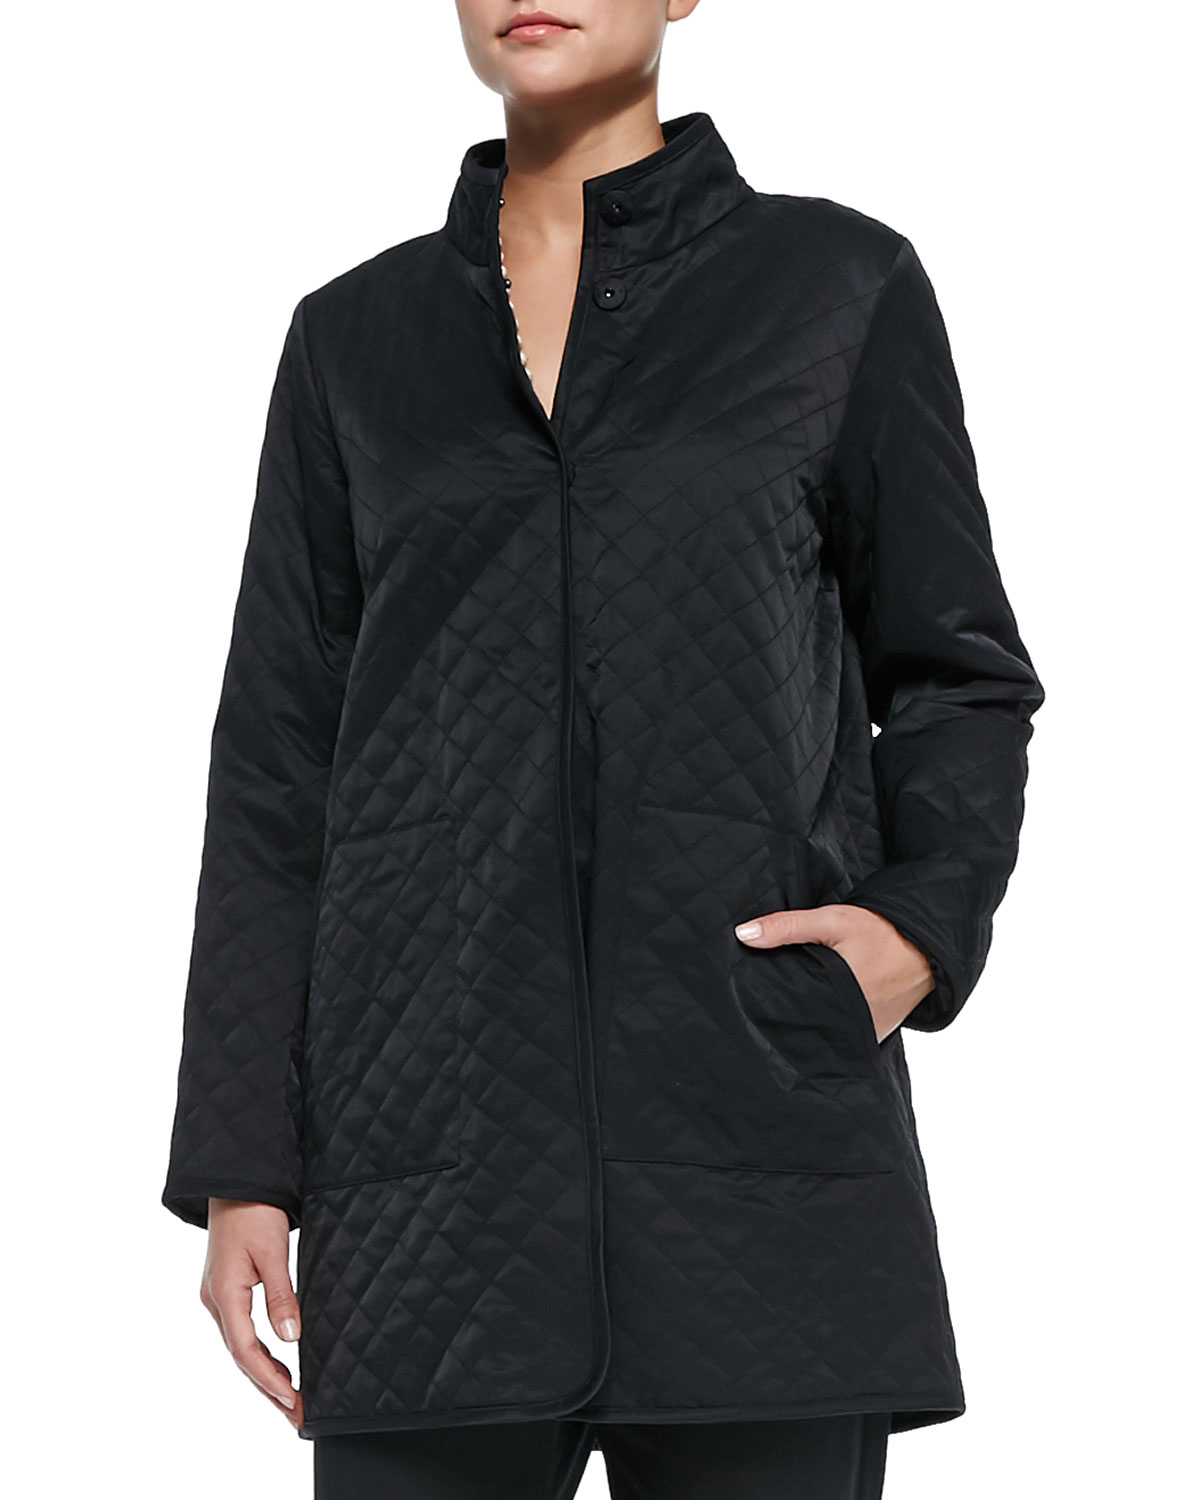 Lyst - Eileen Fisher Quilted Long Jacket W/ Fleece Lining in Black